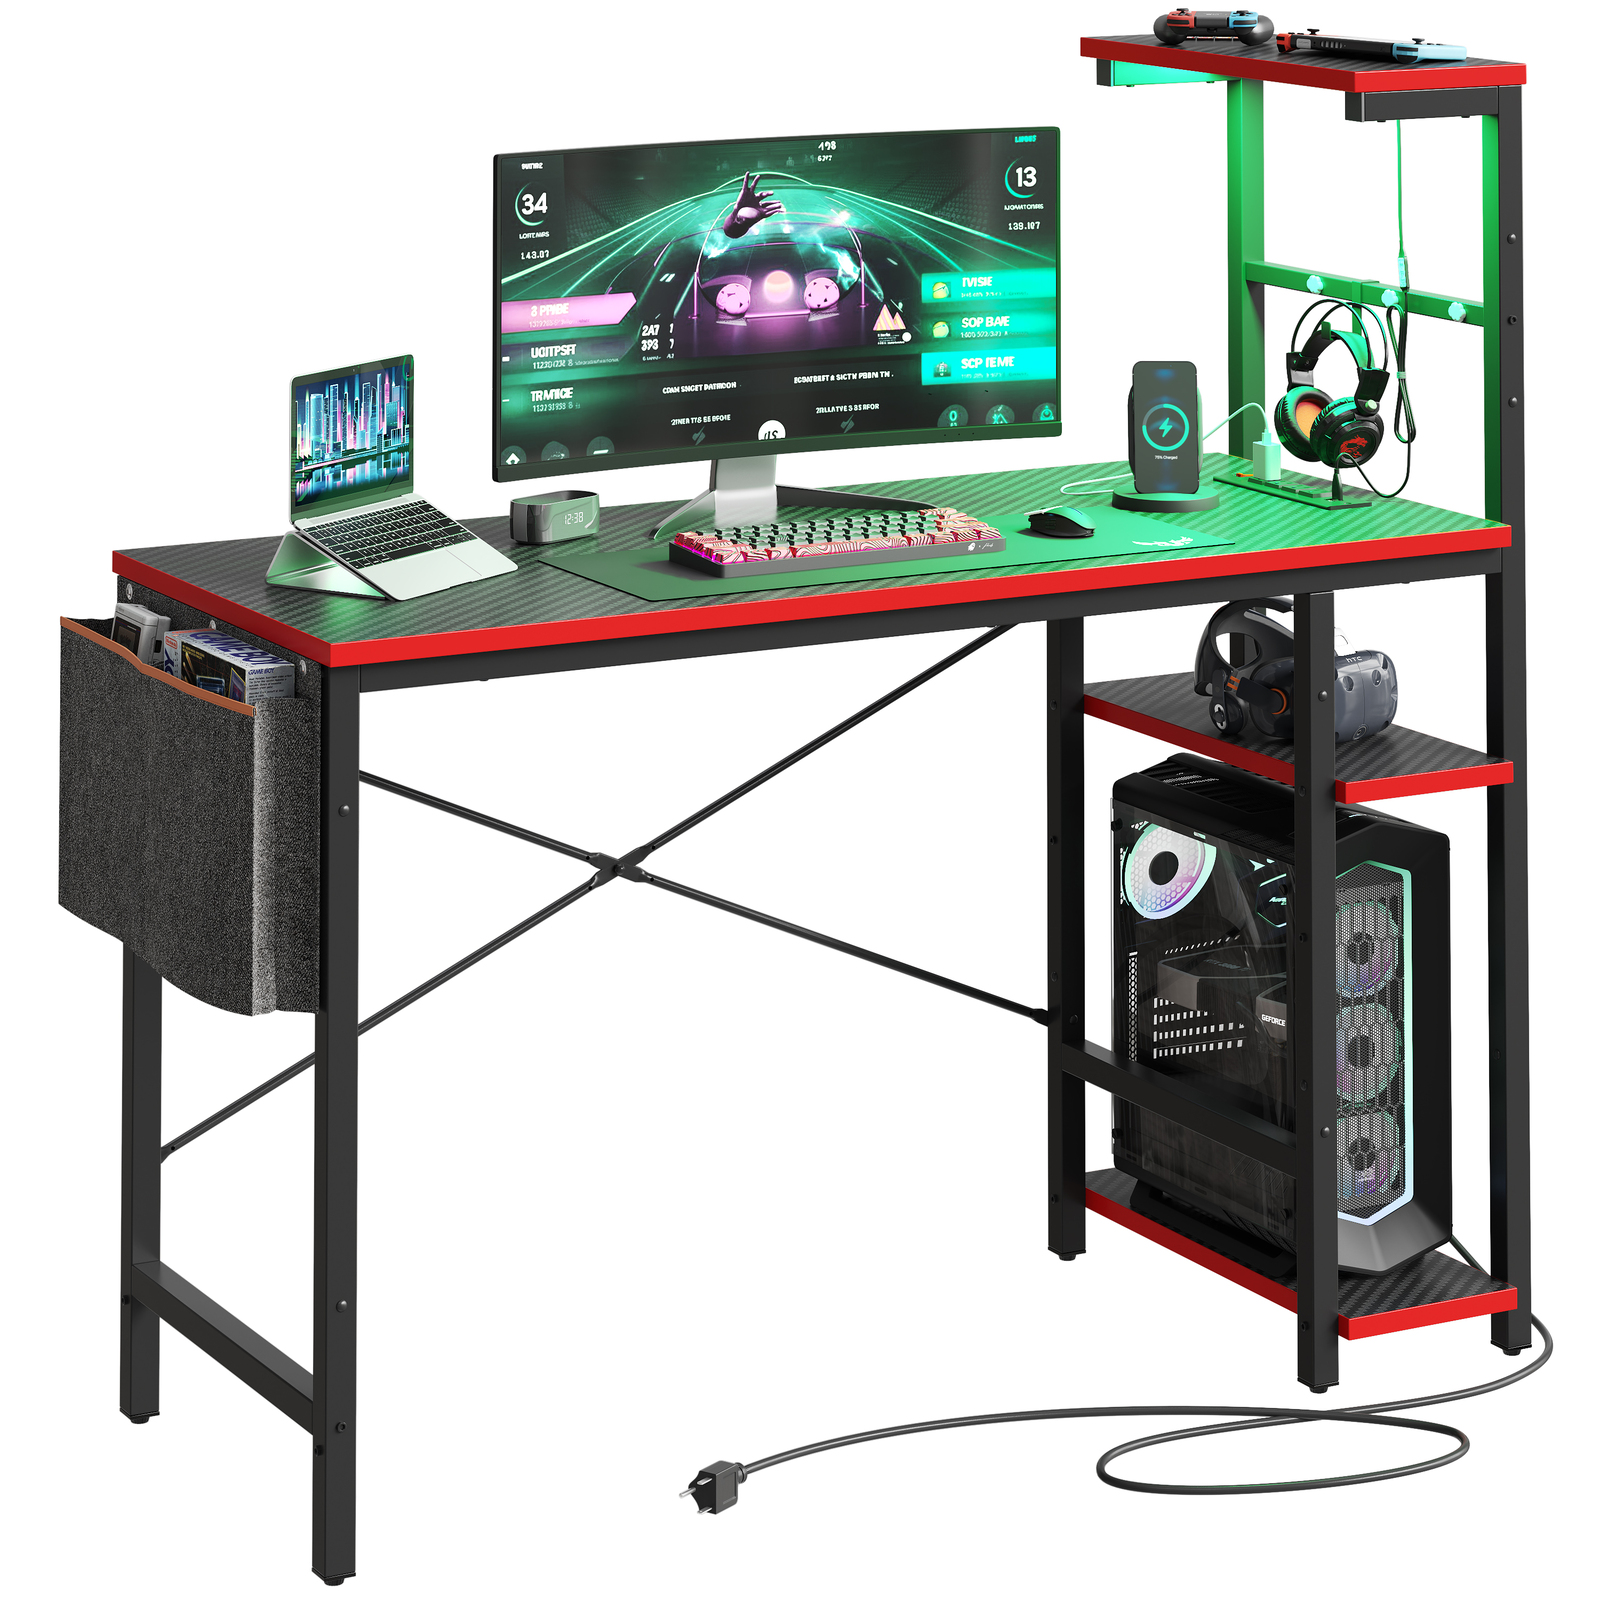 Bestier 47 inch LED Gaming Desk with Outlets & USB Ports Computer Desk with Storage Shelves in Black Carbon Fiber - image 3 of 8